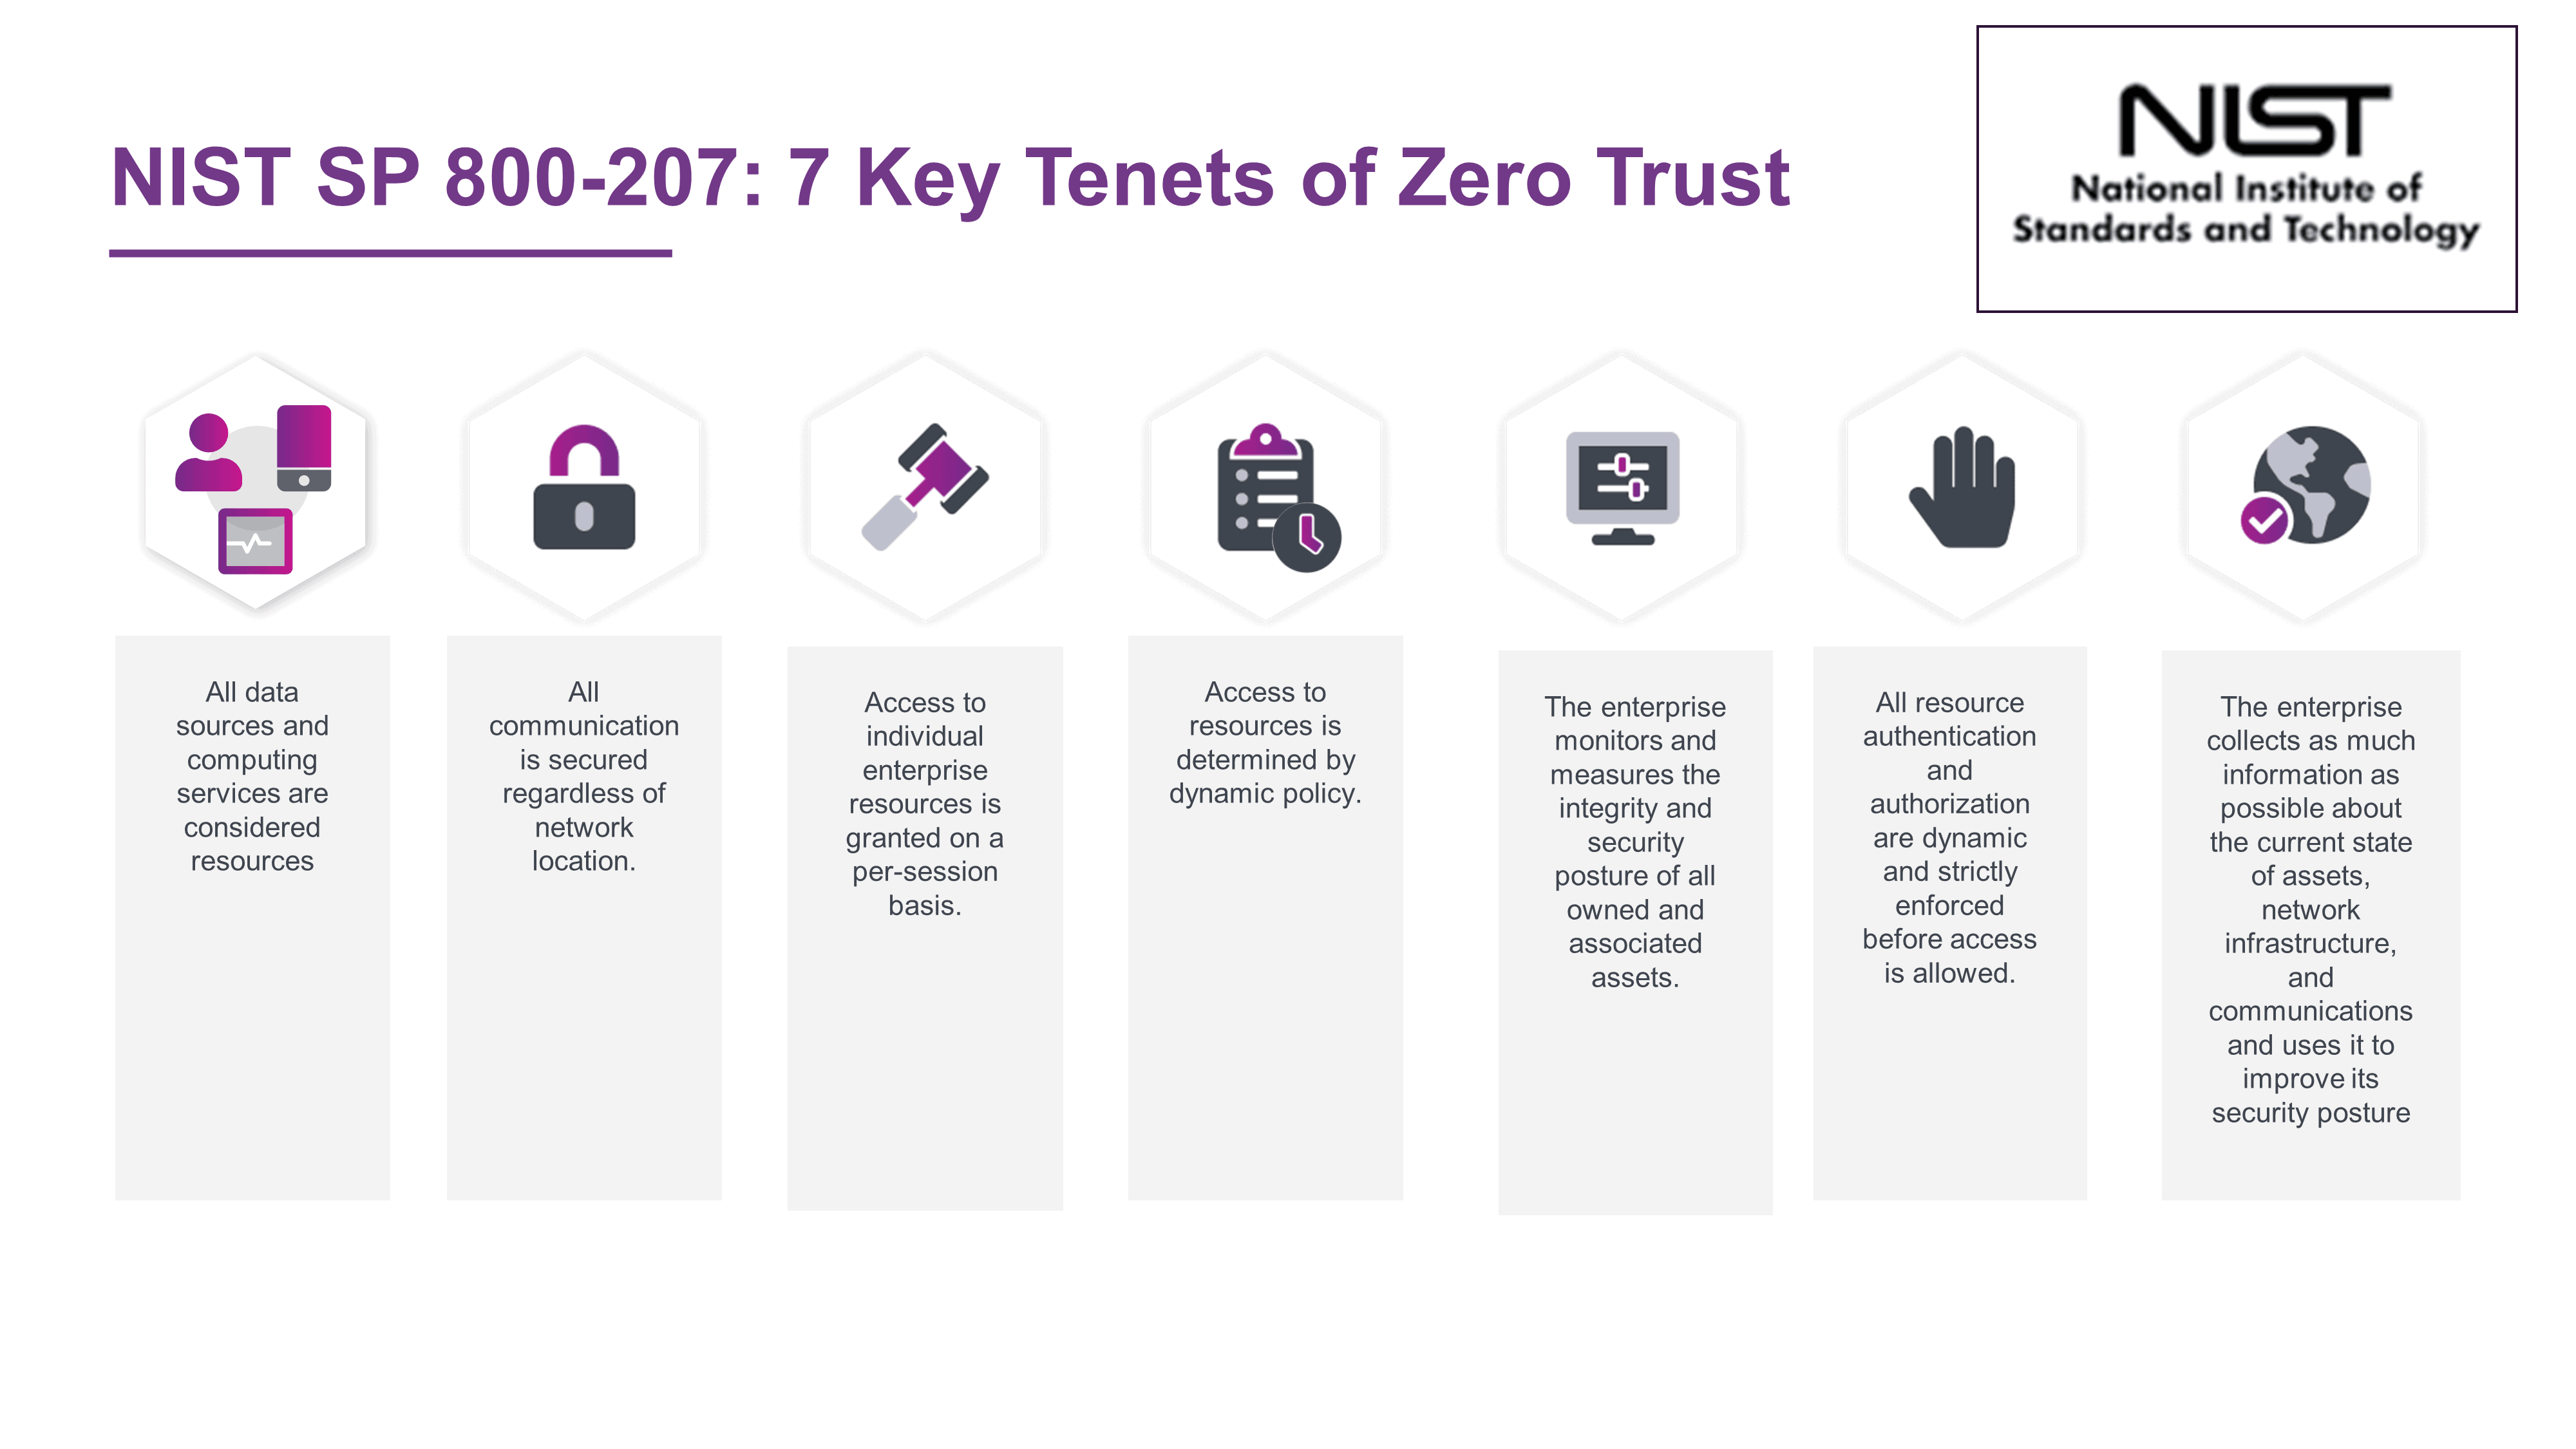 7 Key Tenets of Zero Trust